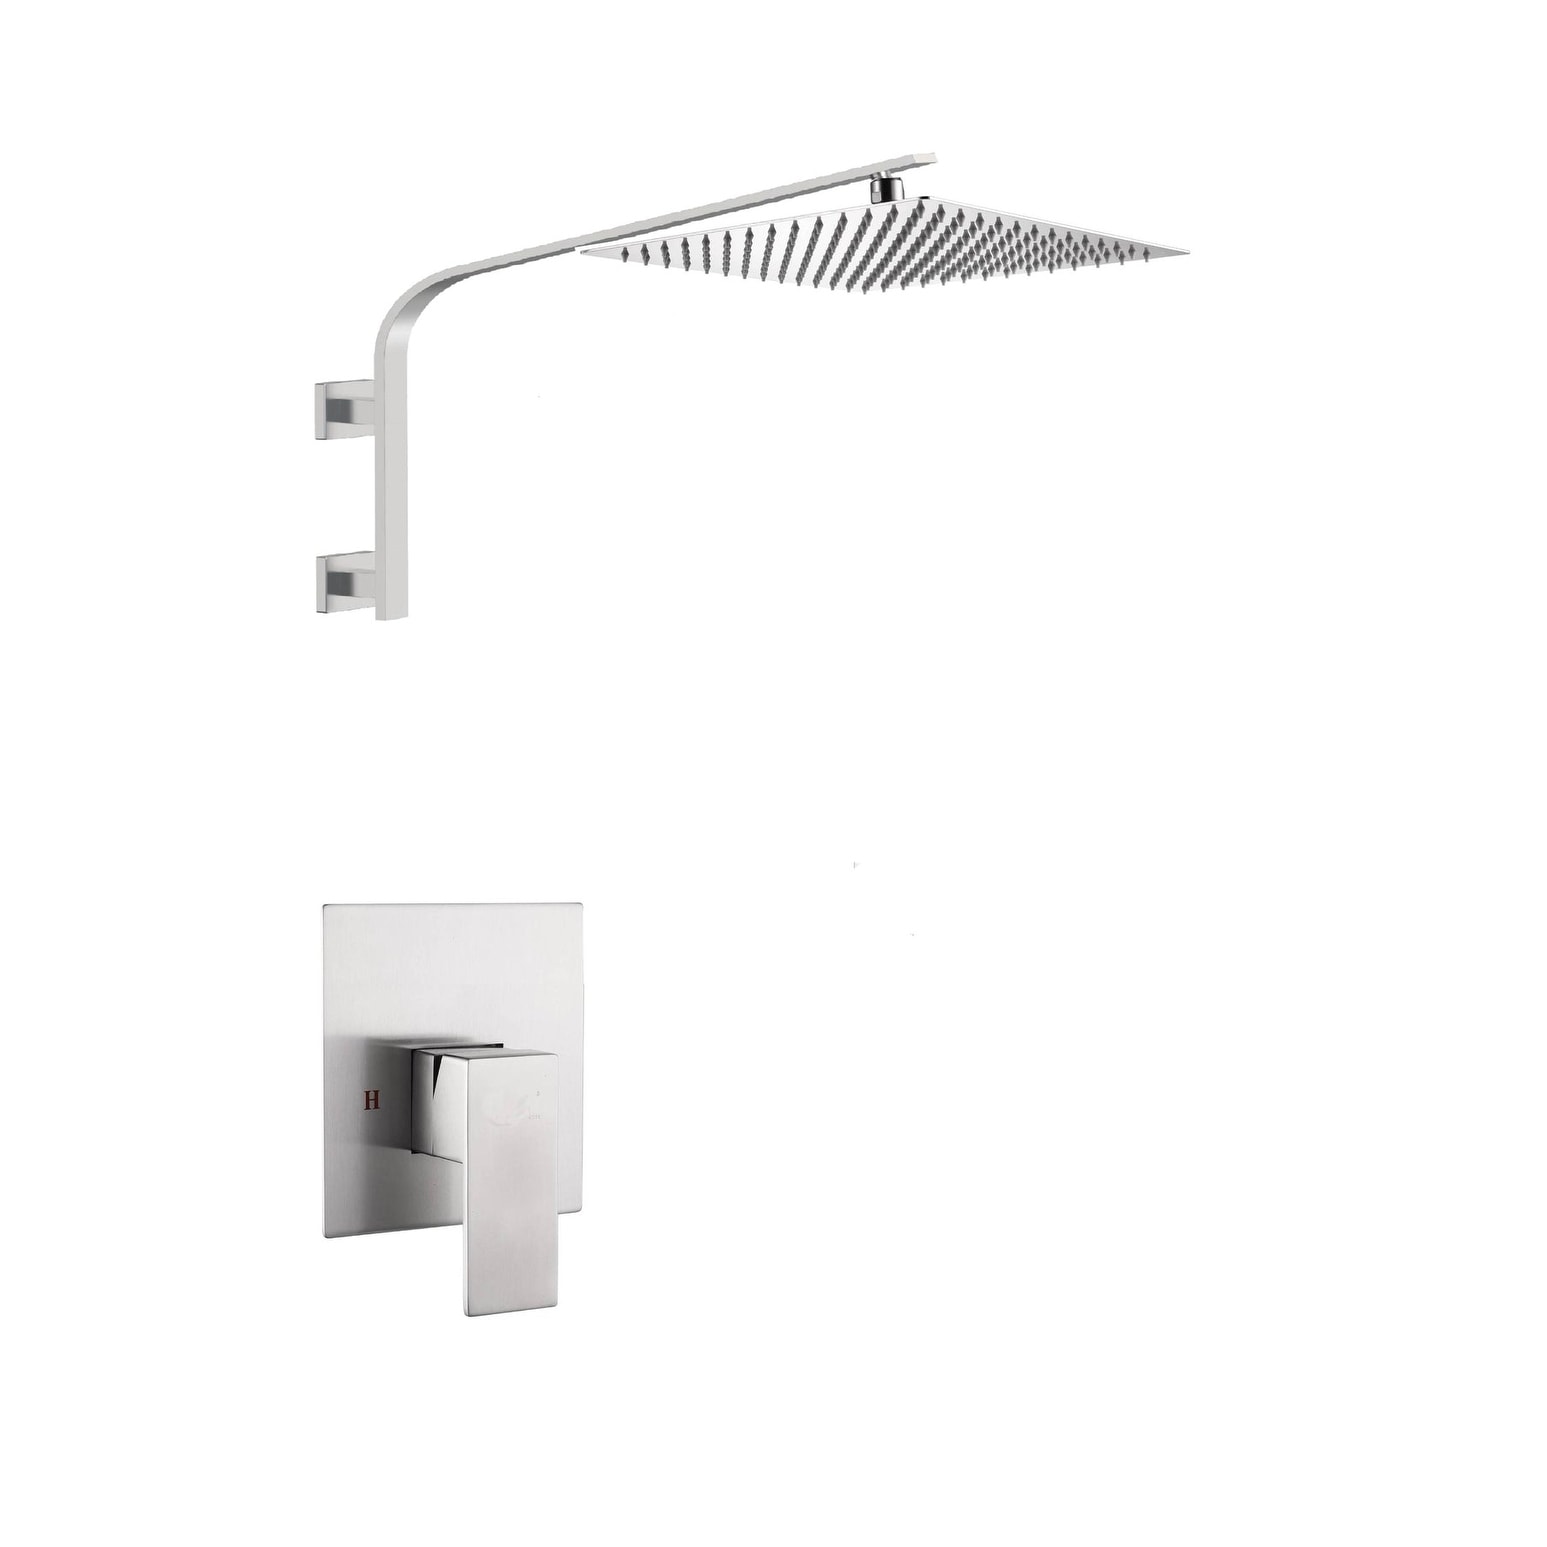 Brushed nickel wall mount 12 inch rain head single function shower faucet - 12' x 12'